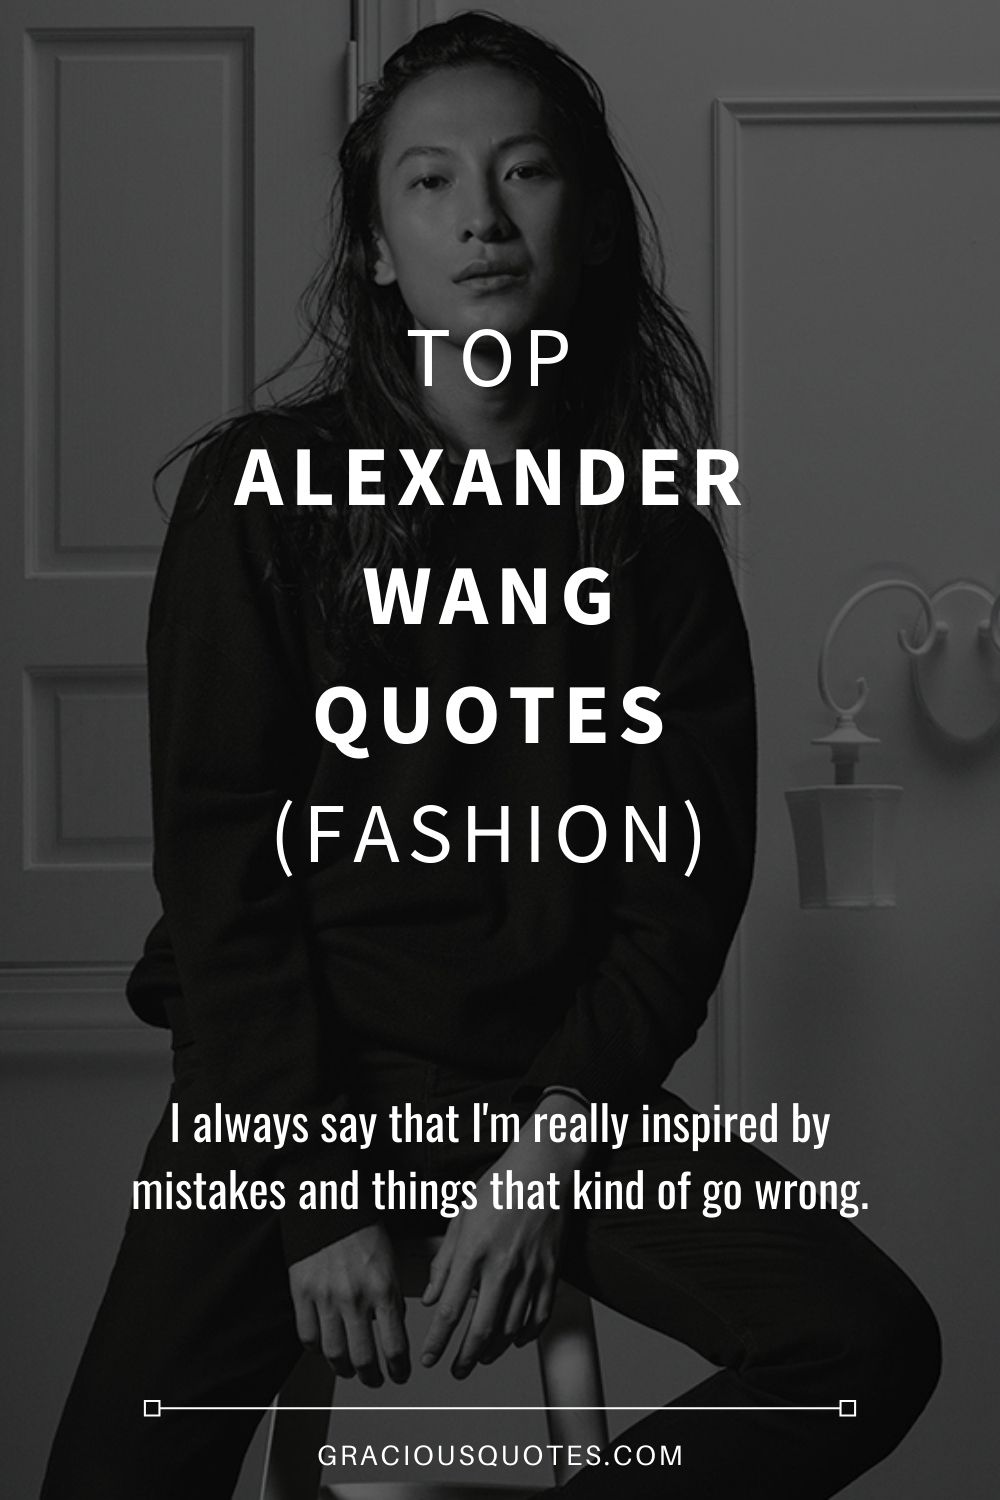 Top Alexander Wang Quotes (FASHION) - Gracious Quotes